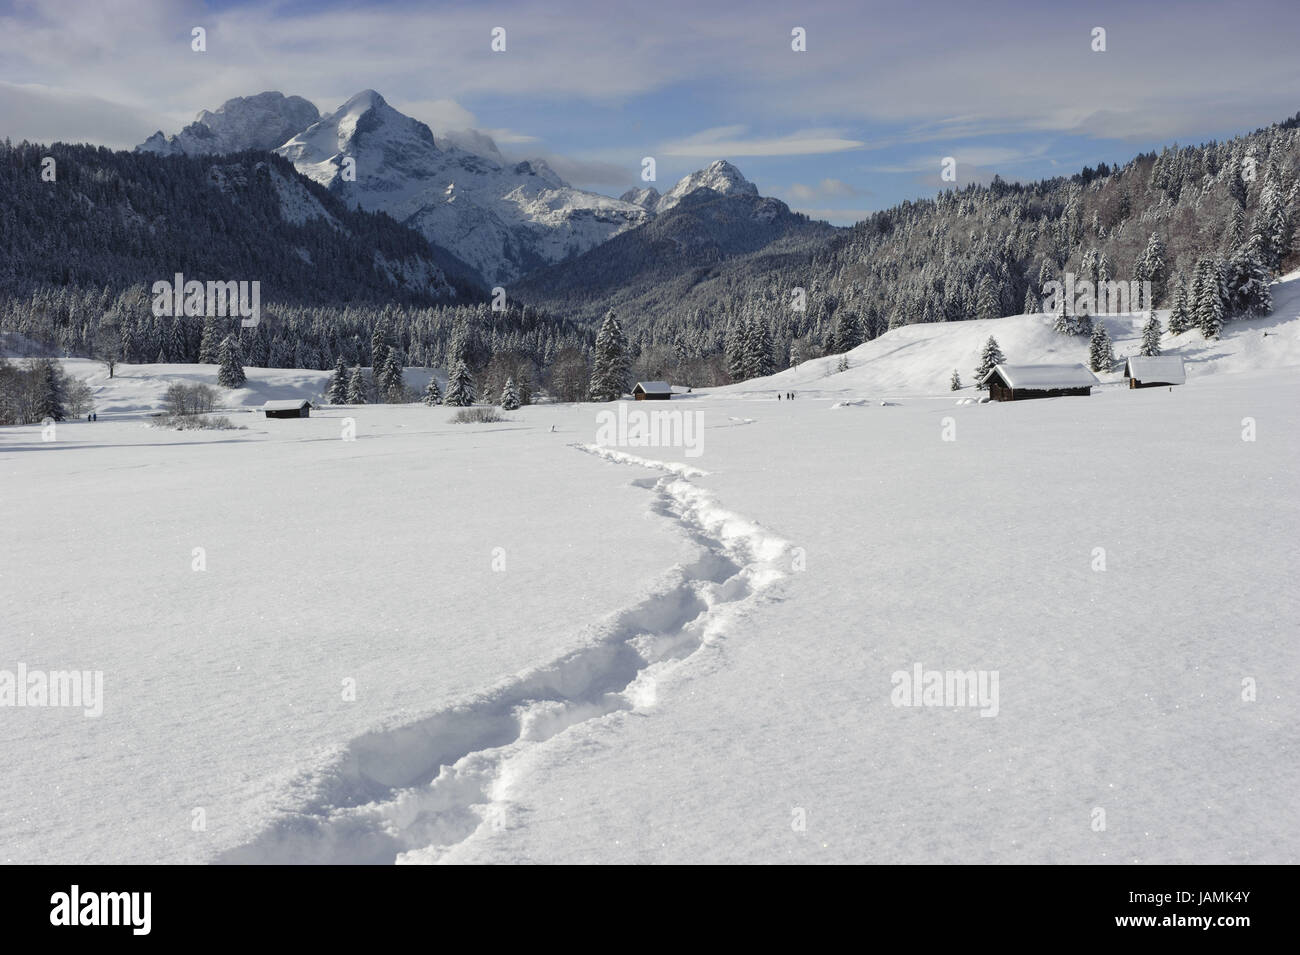 Landschaft in Elmau, Blick auf Wettersteingebirge mit Alpspitze, Winter, Schnee, Spuren, Stockfoto